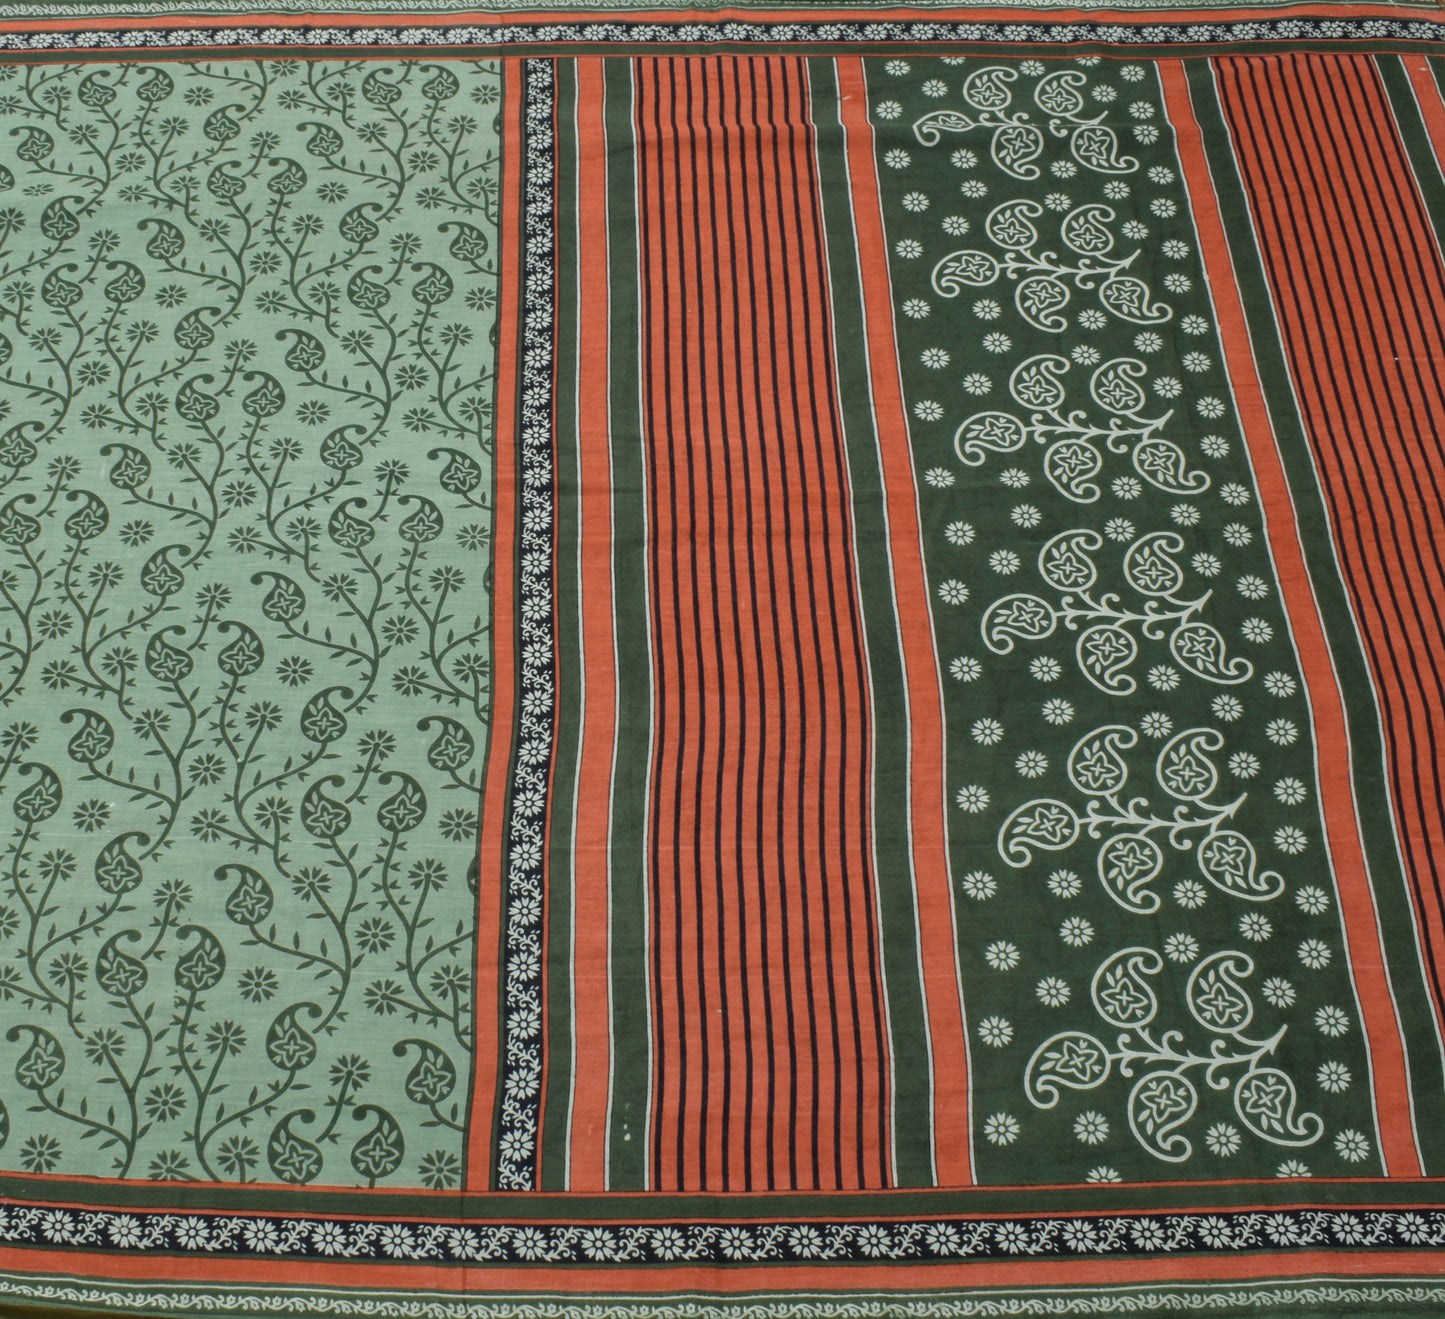 Sushila Vintage Green Saree 100% Pure Cotton Printed Paisley Soft Craft Fabric